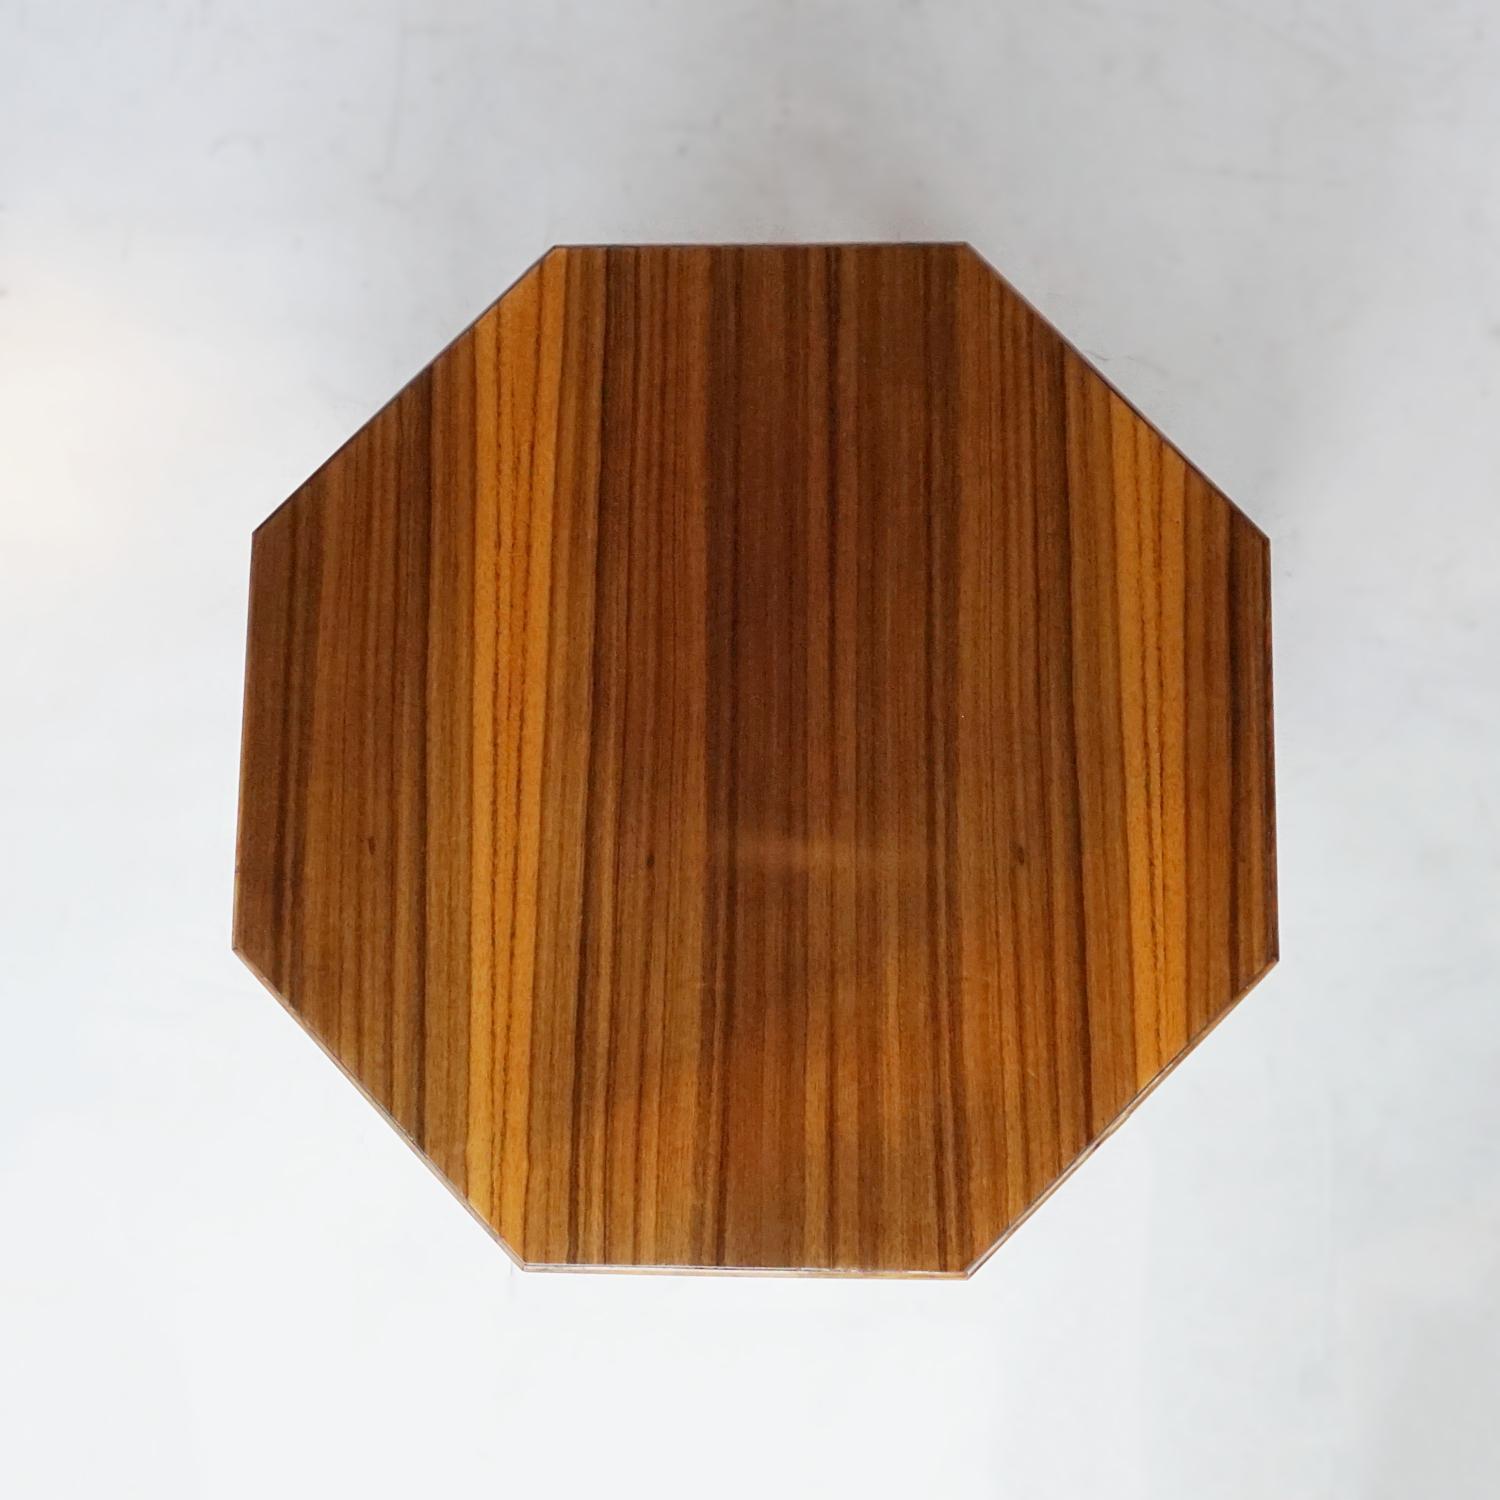 octagonal coffee table